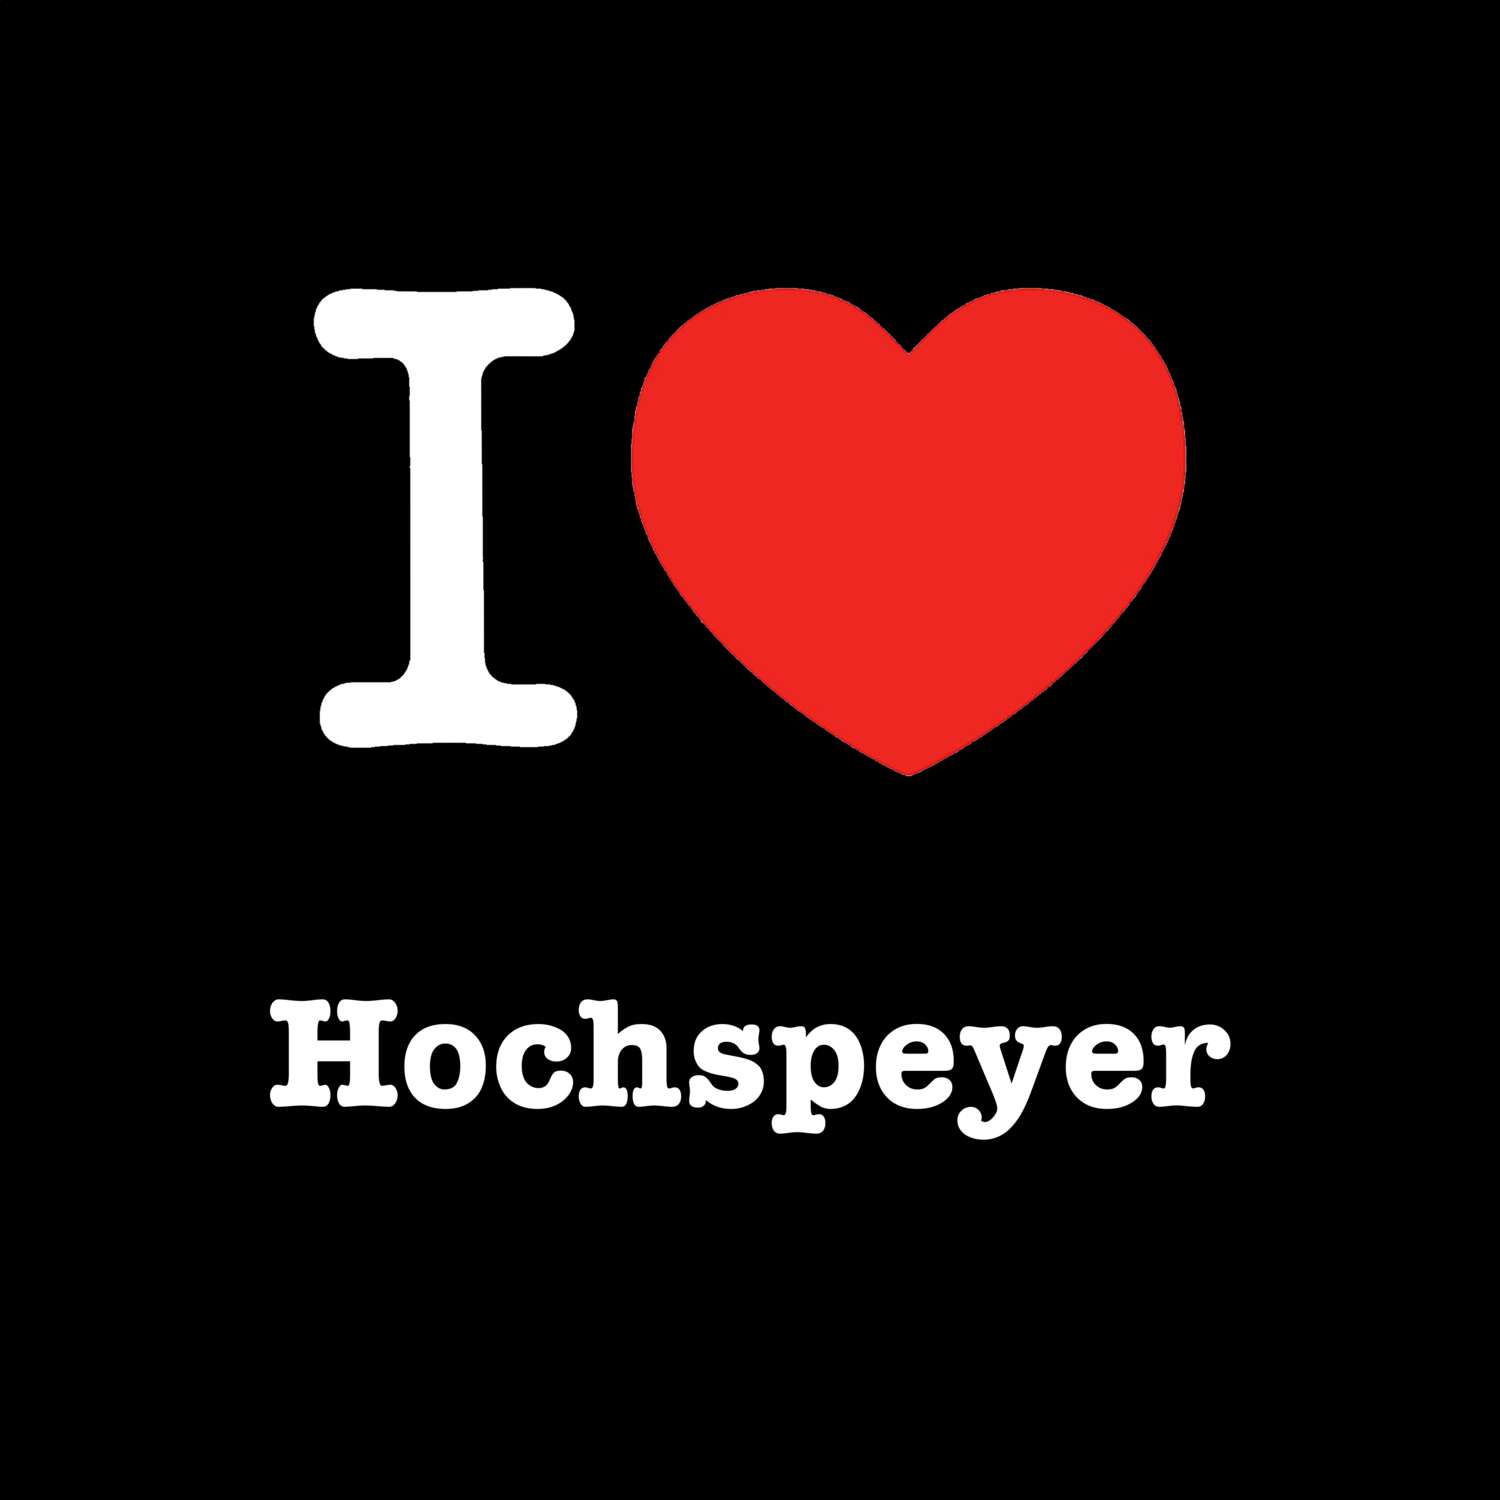 Hochspeyer T-Shirt »I love«